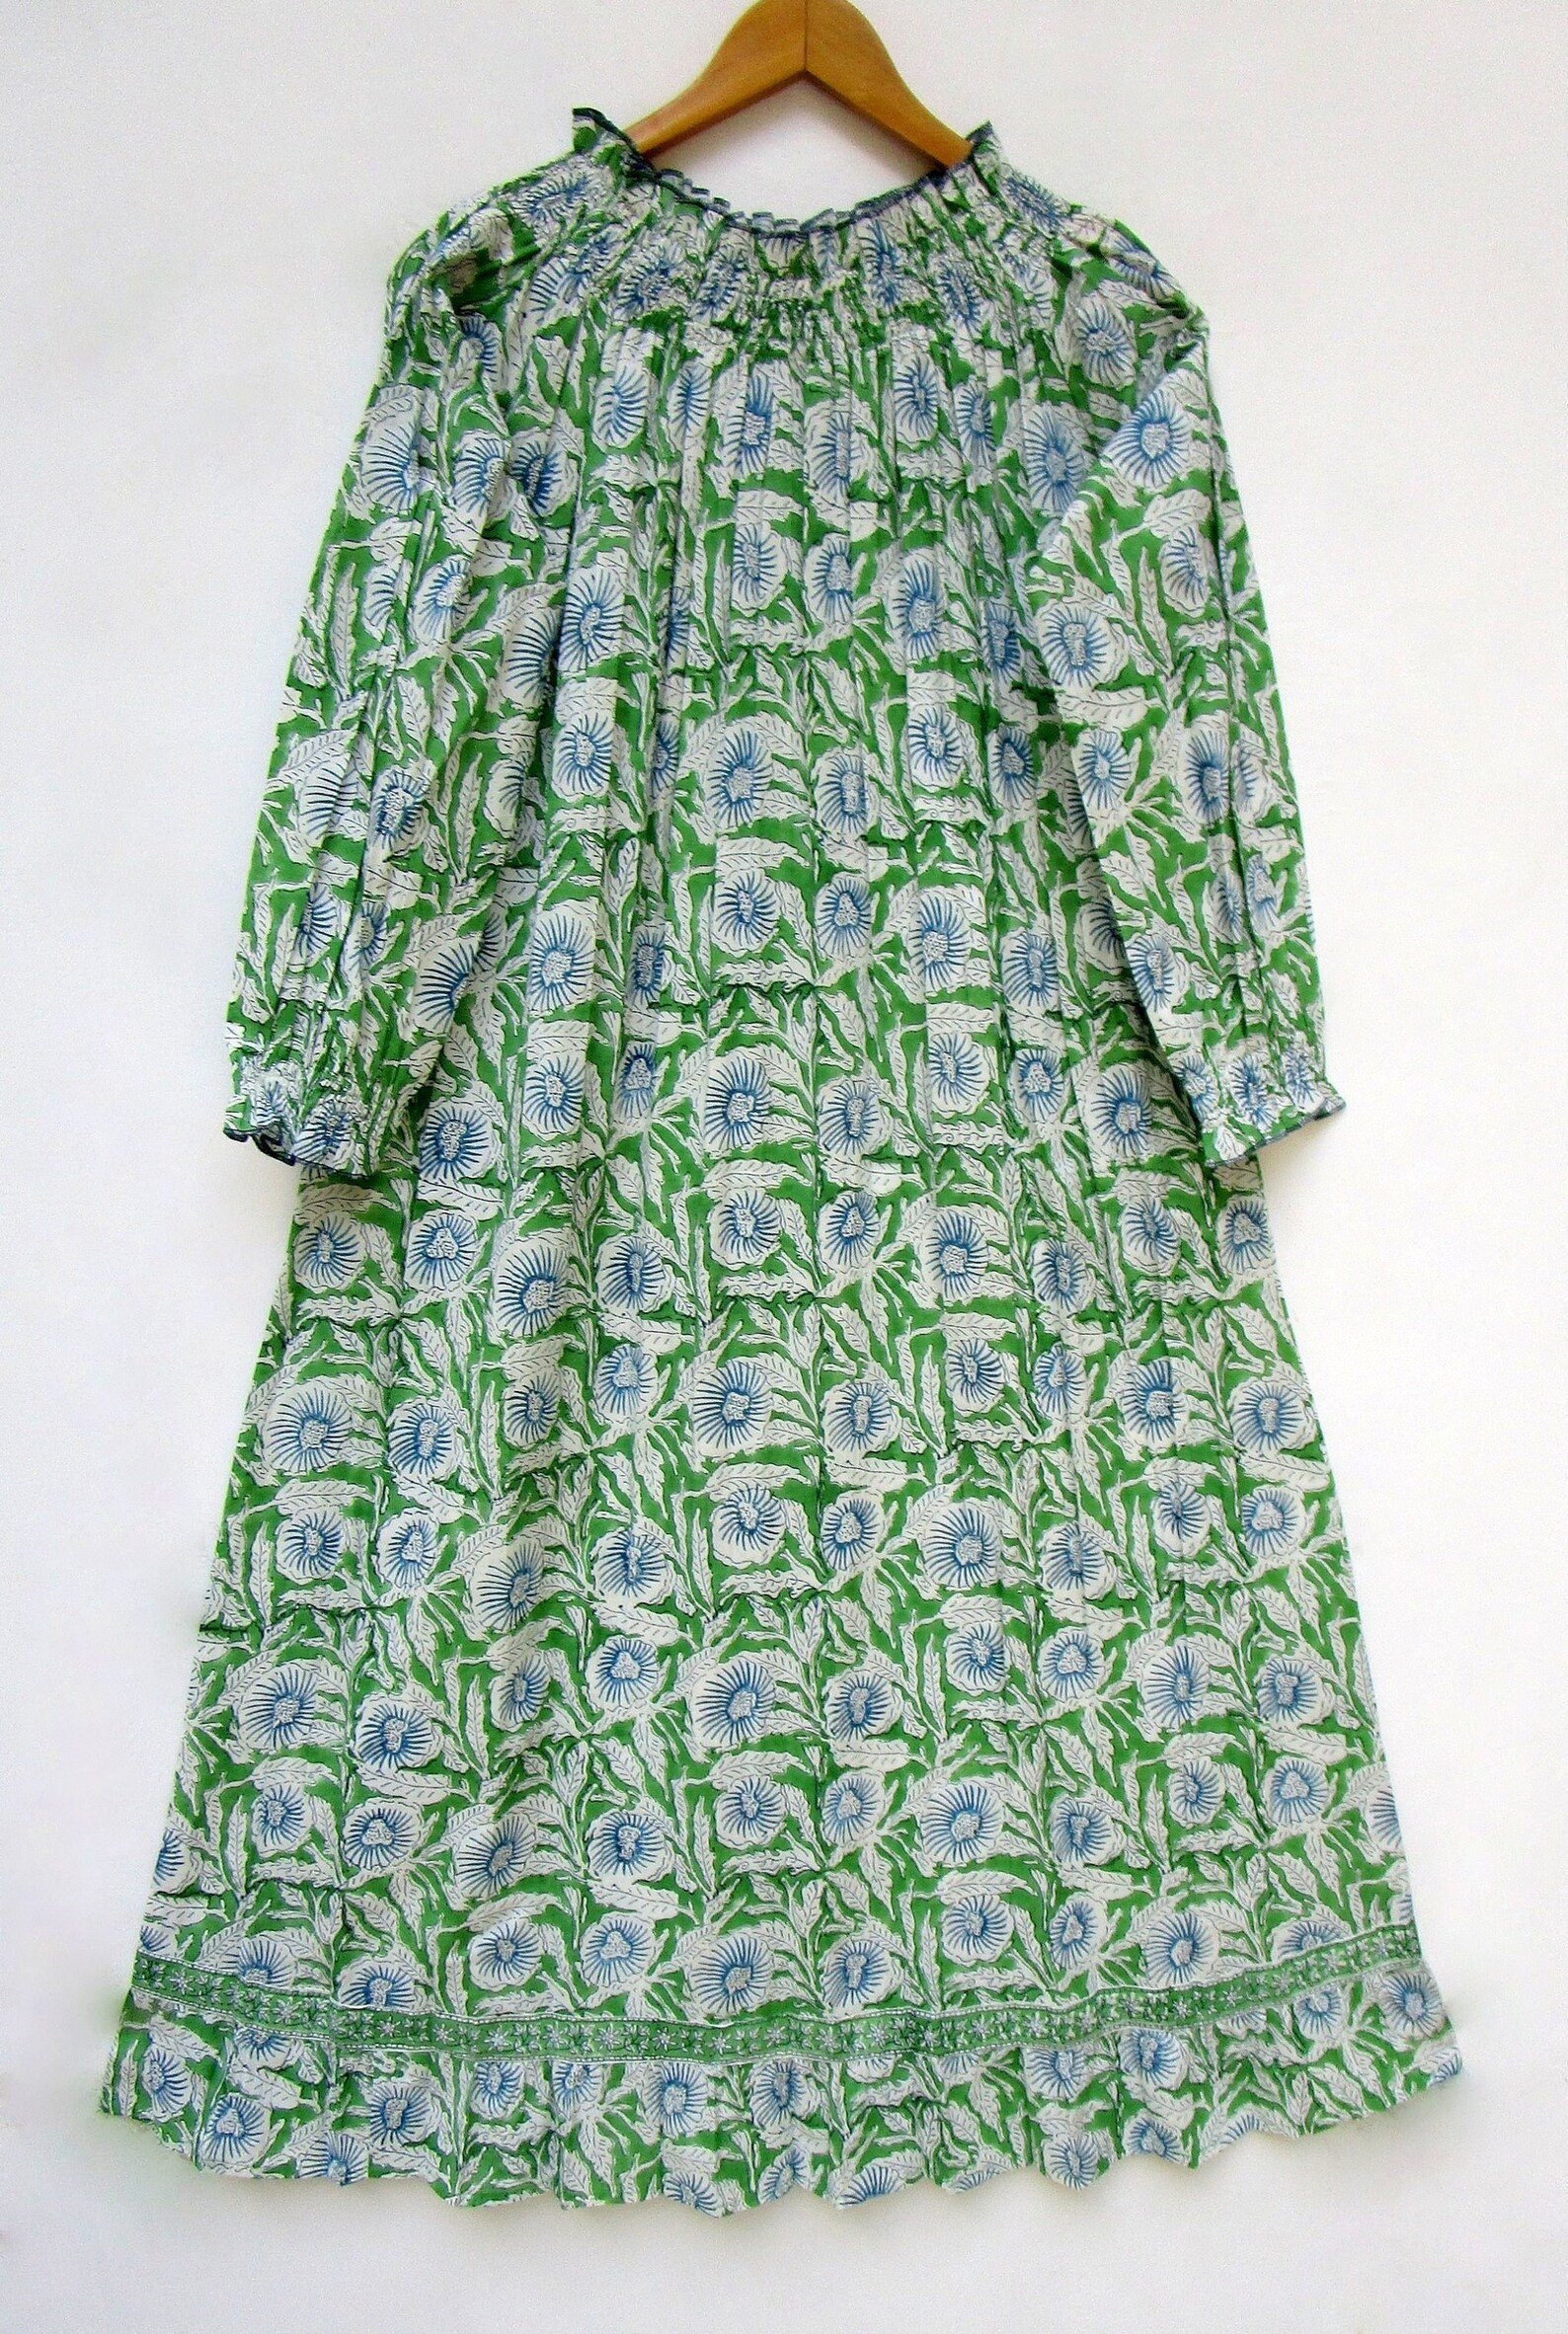 Block Print Cotton Dress, $55